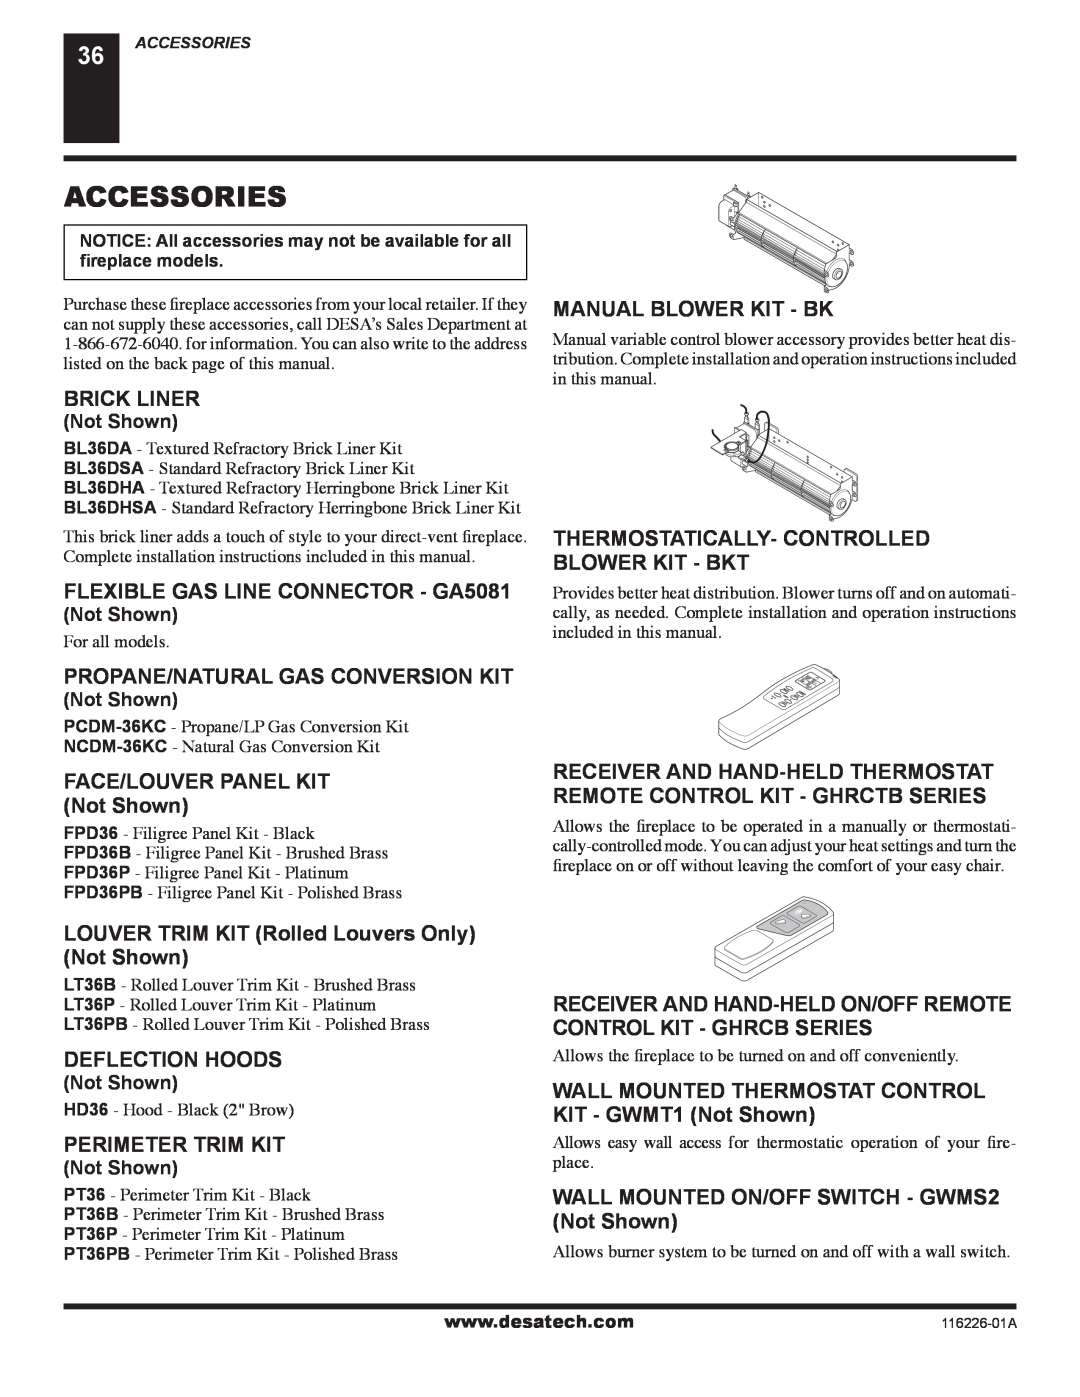 Desa (V)KC36N Accessories, Brick Liner, FLEXIBLE GAS LINE CONNECTOR - GA5081, Manual Blower Kit - Bk, Deflection Hoods 